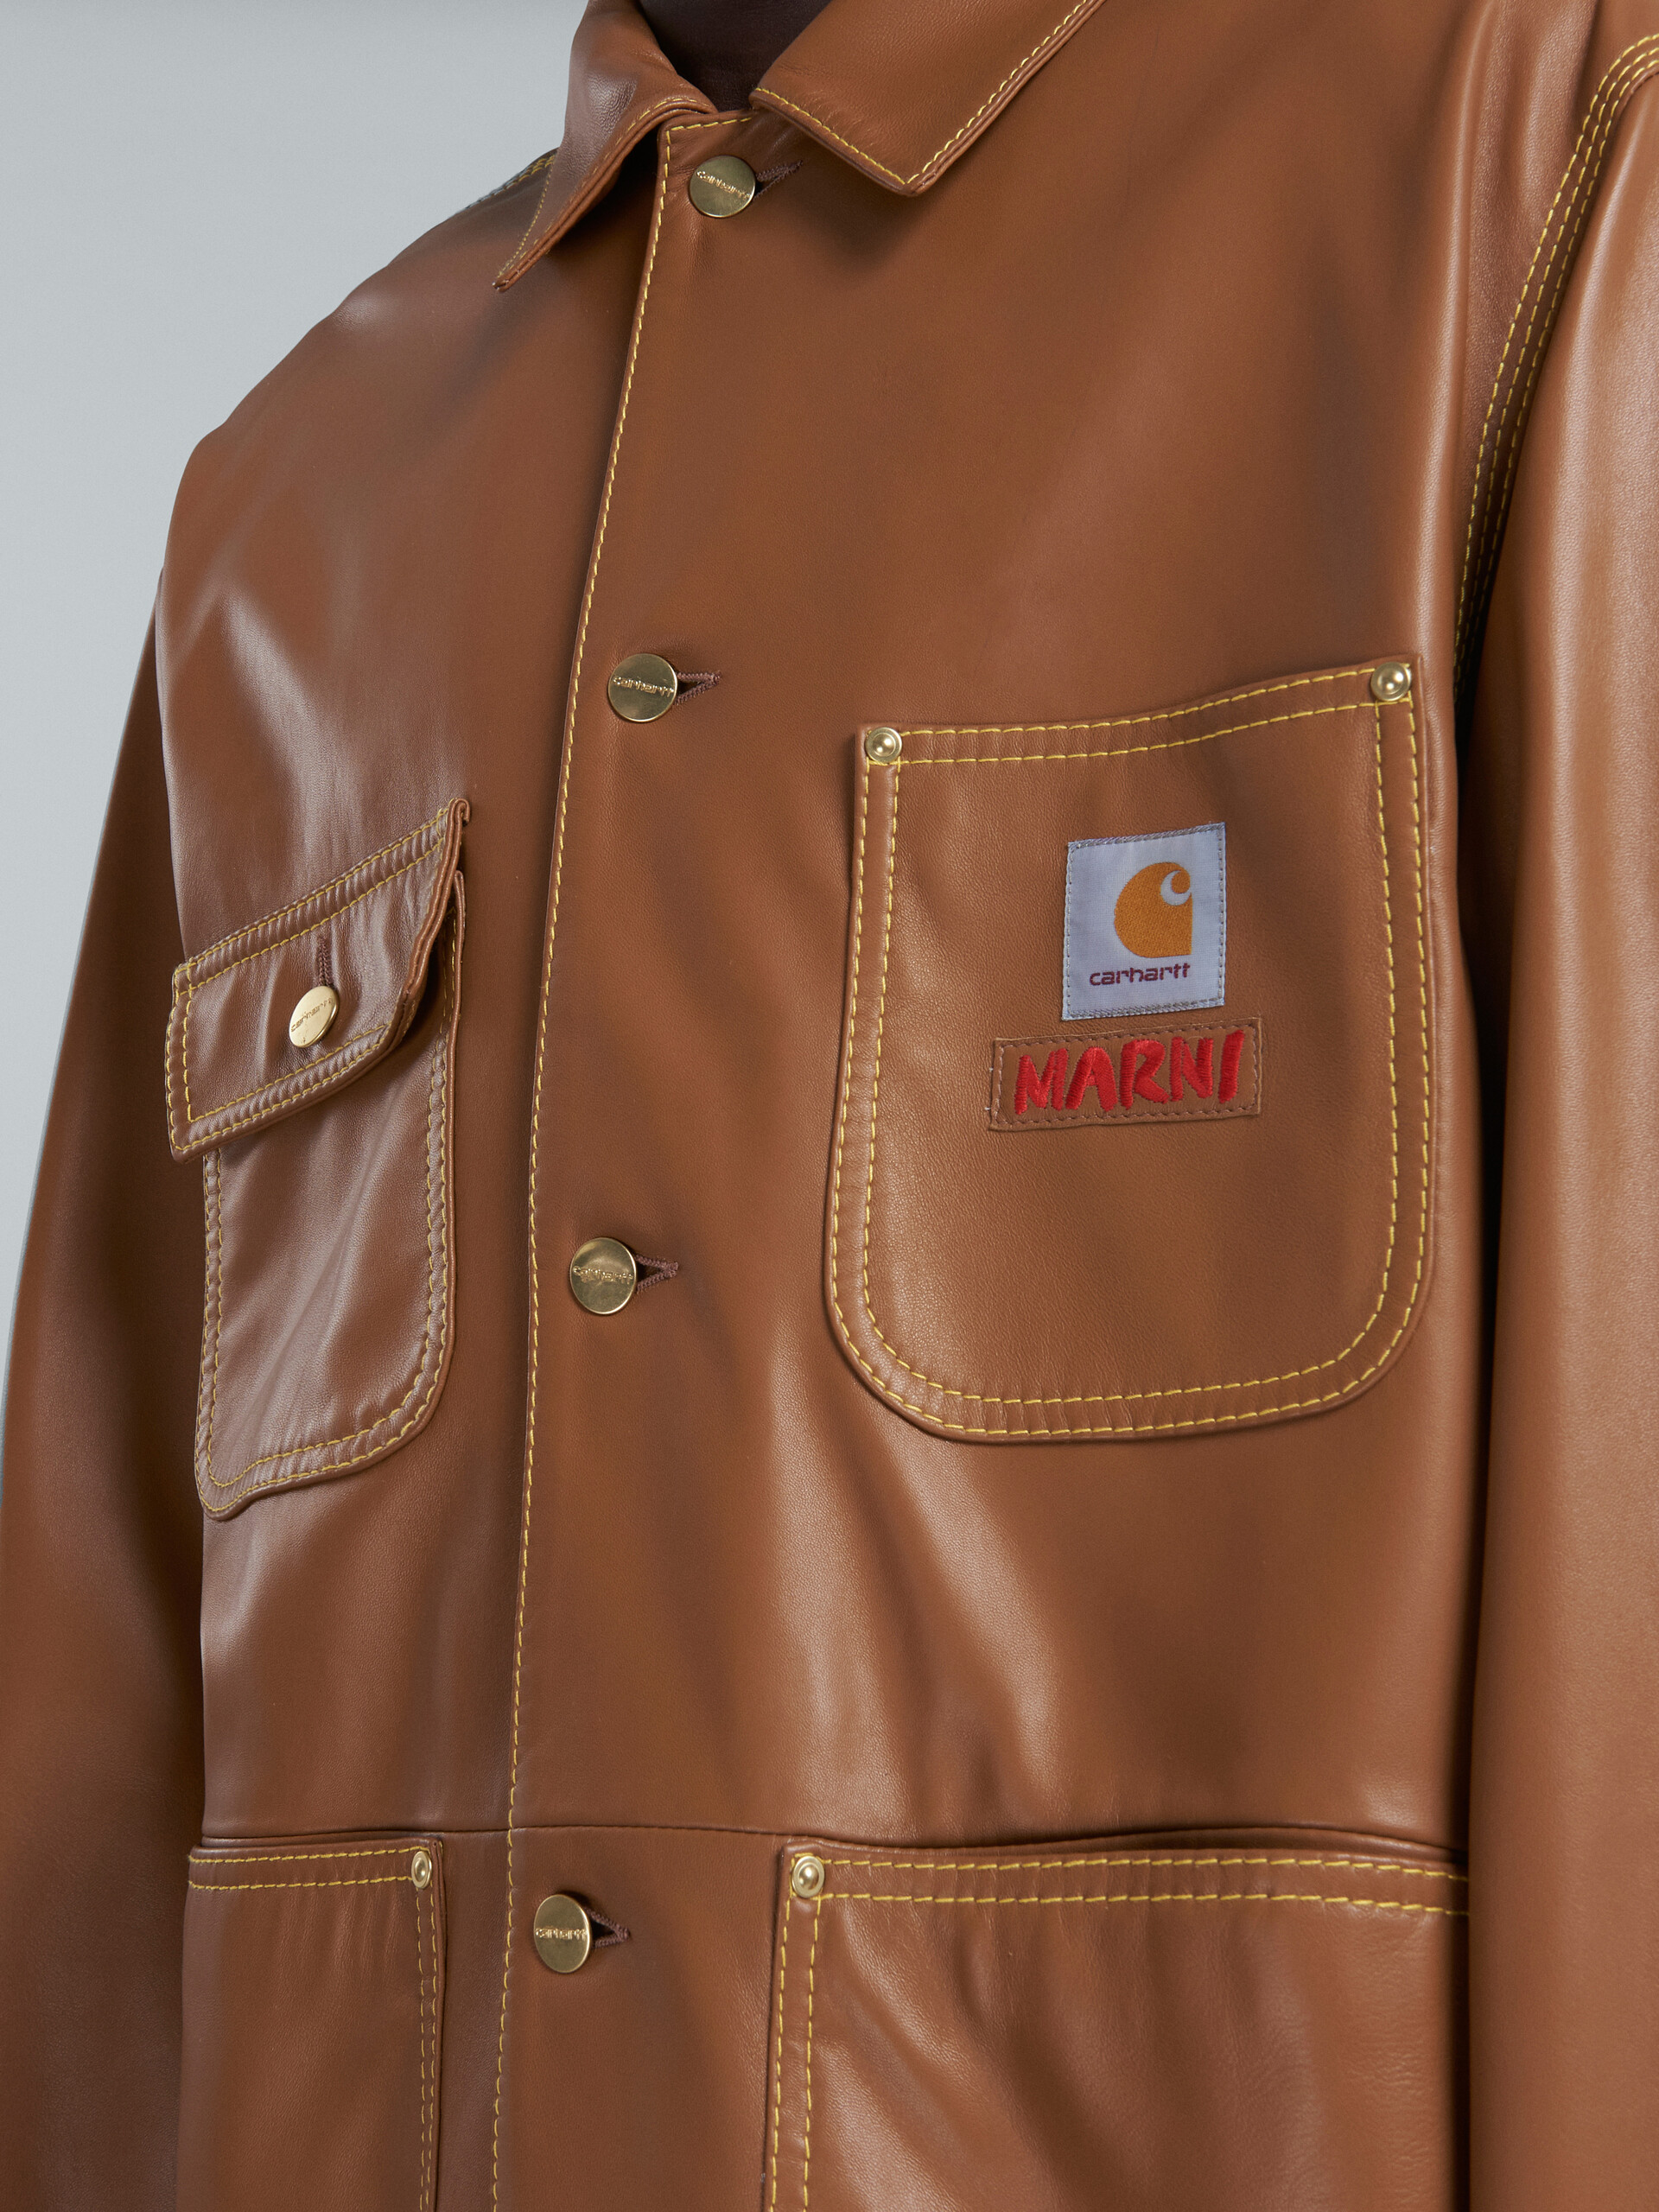 MARNI x CARHARTT WIP - brown leather jacket - Jackets - Image 5